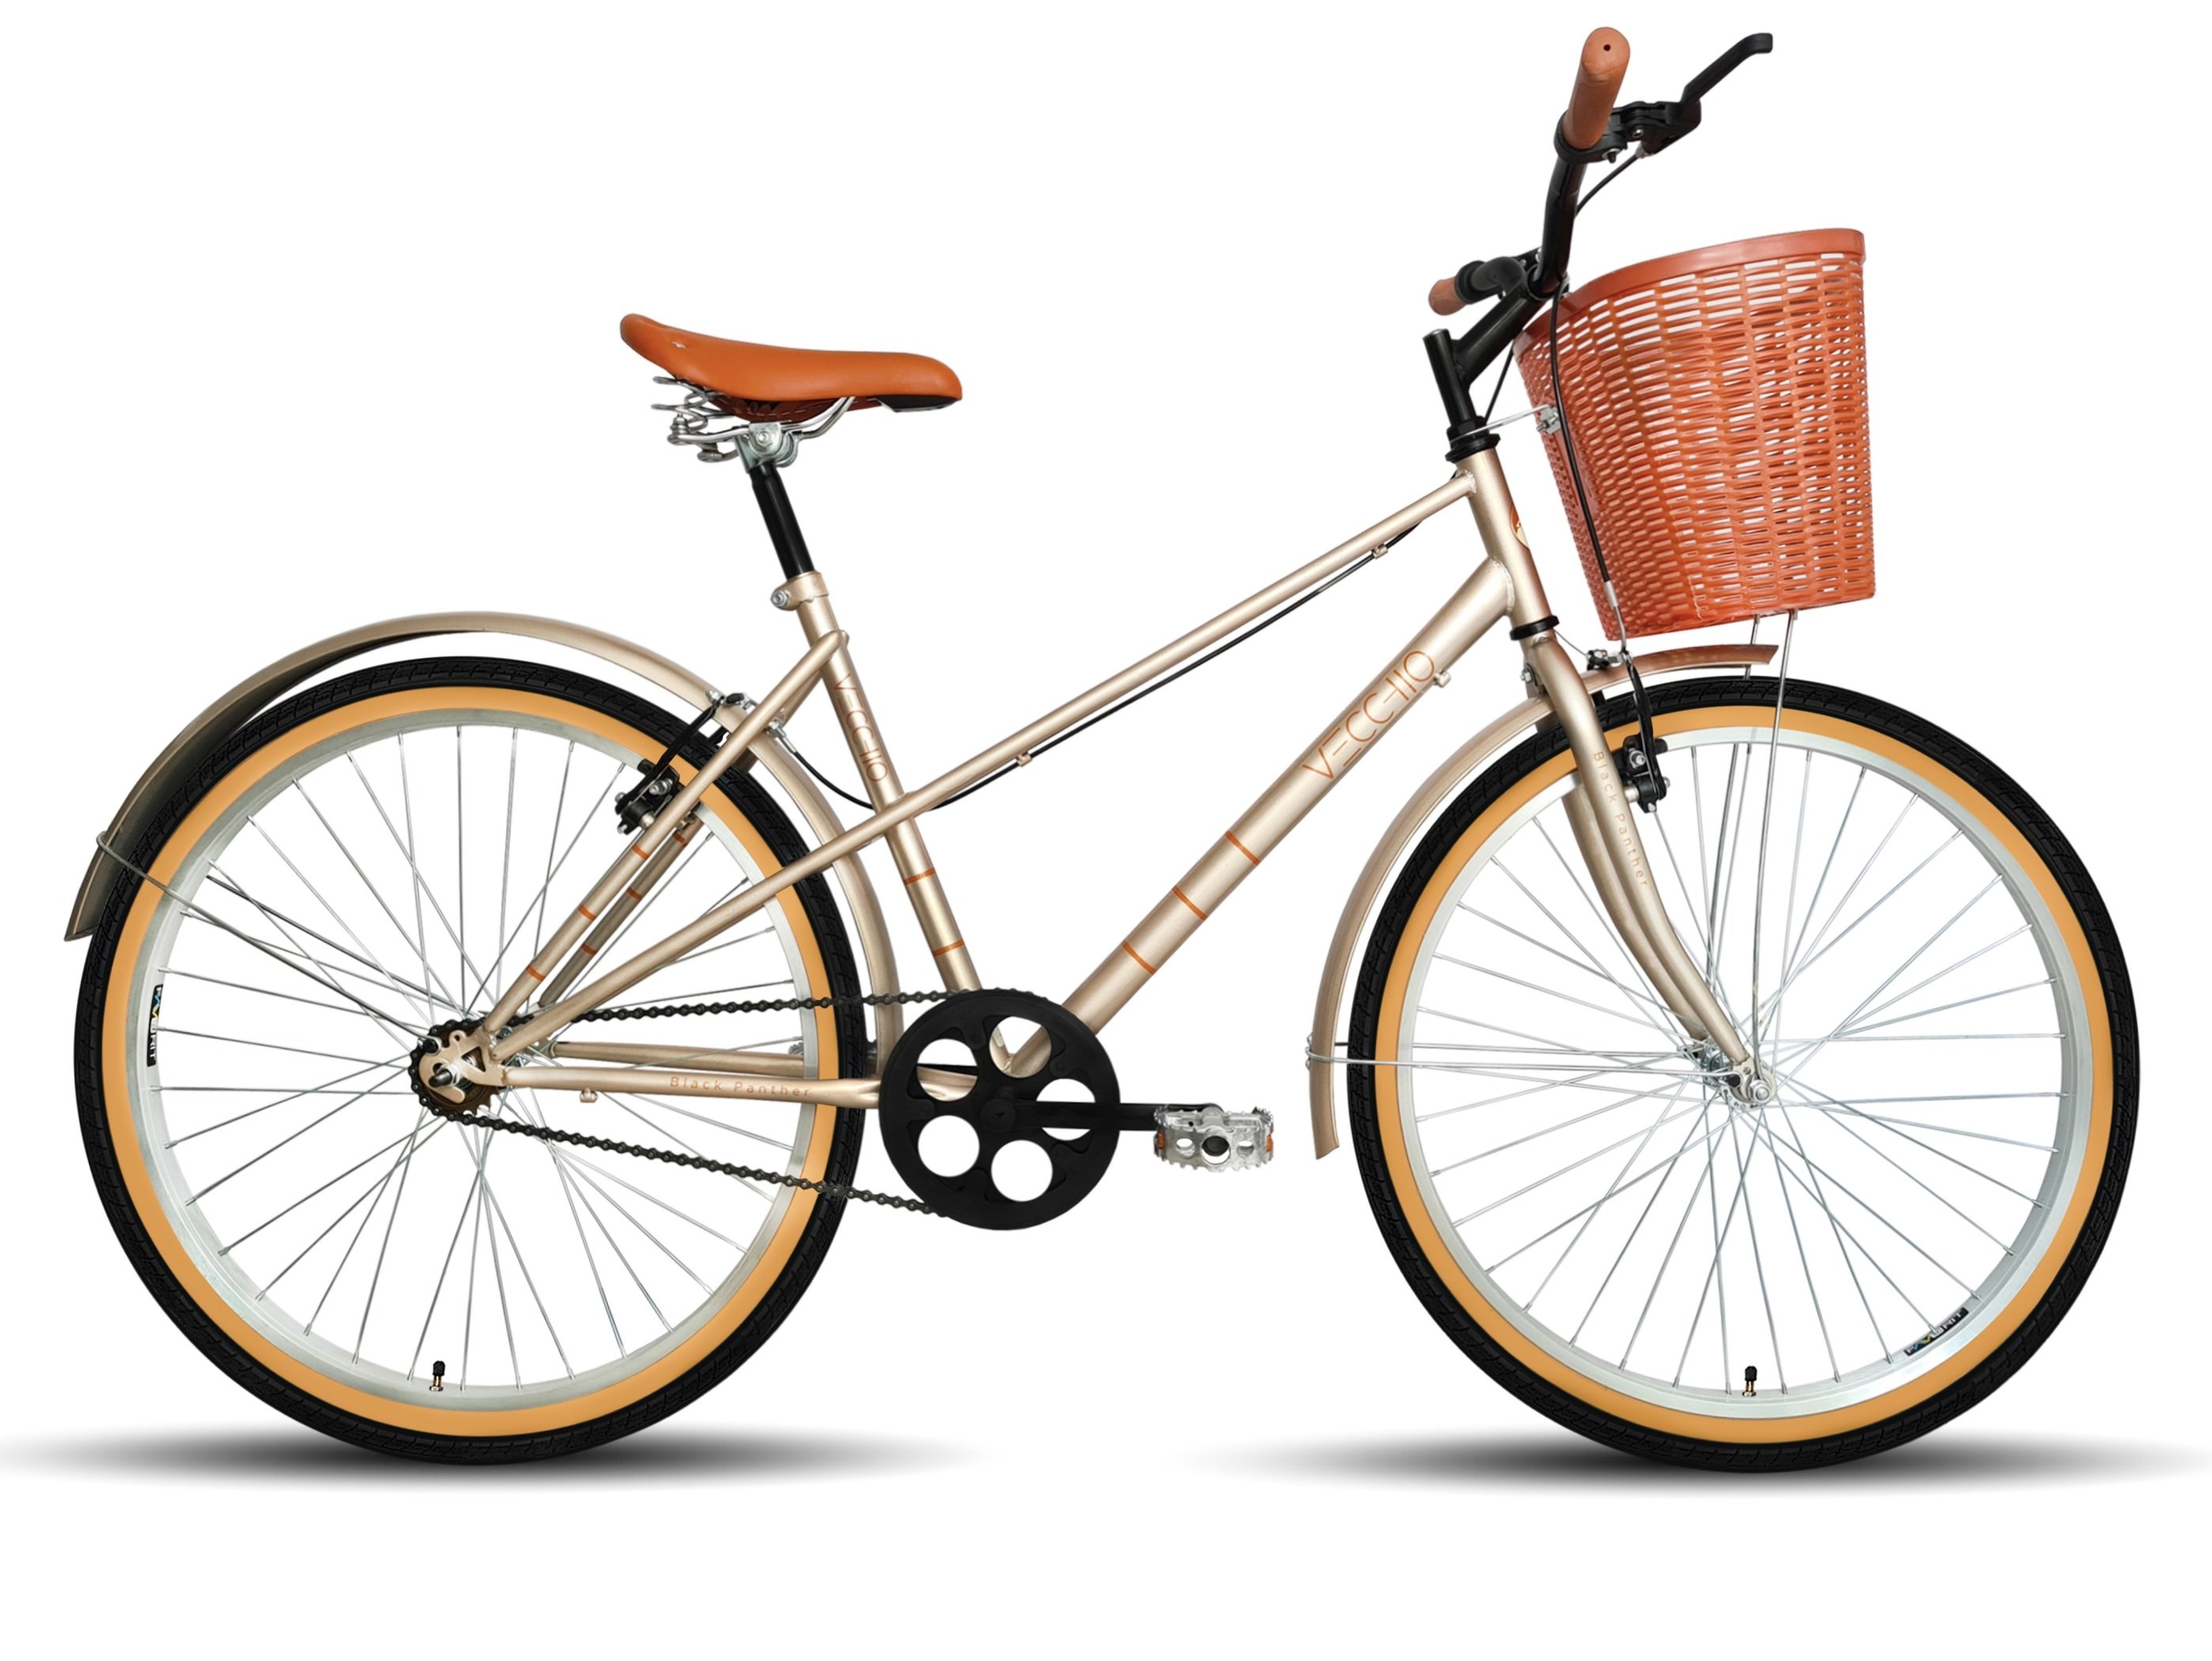 Bicicleta Urbana Rodado 26 Mujer Aro 26 18 Cambios Canasto - Soy Hogar  Muebles